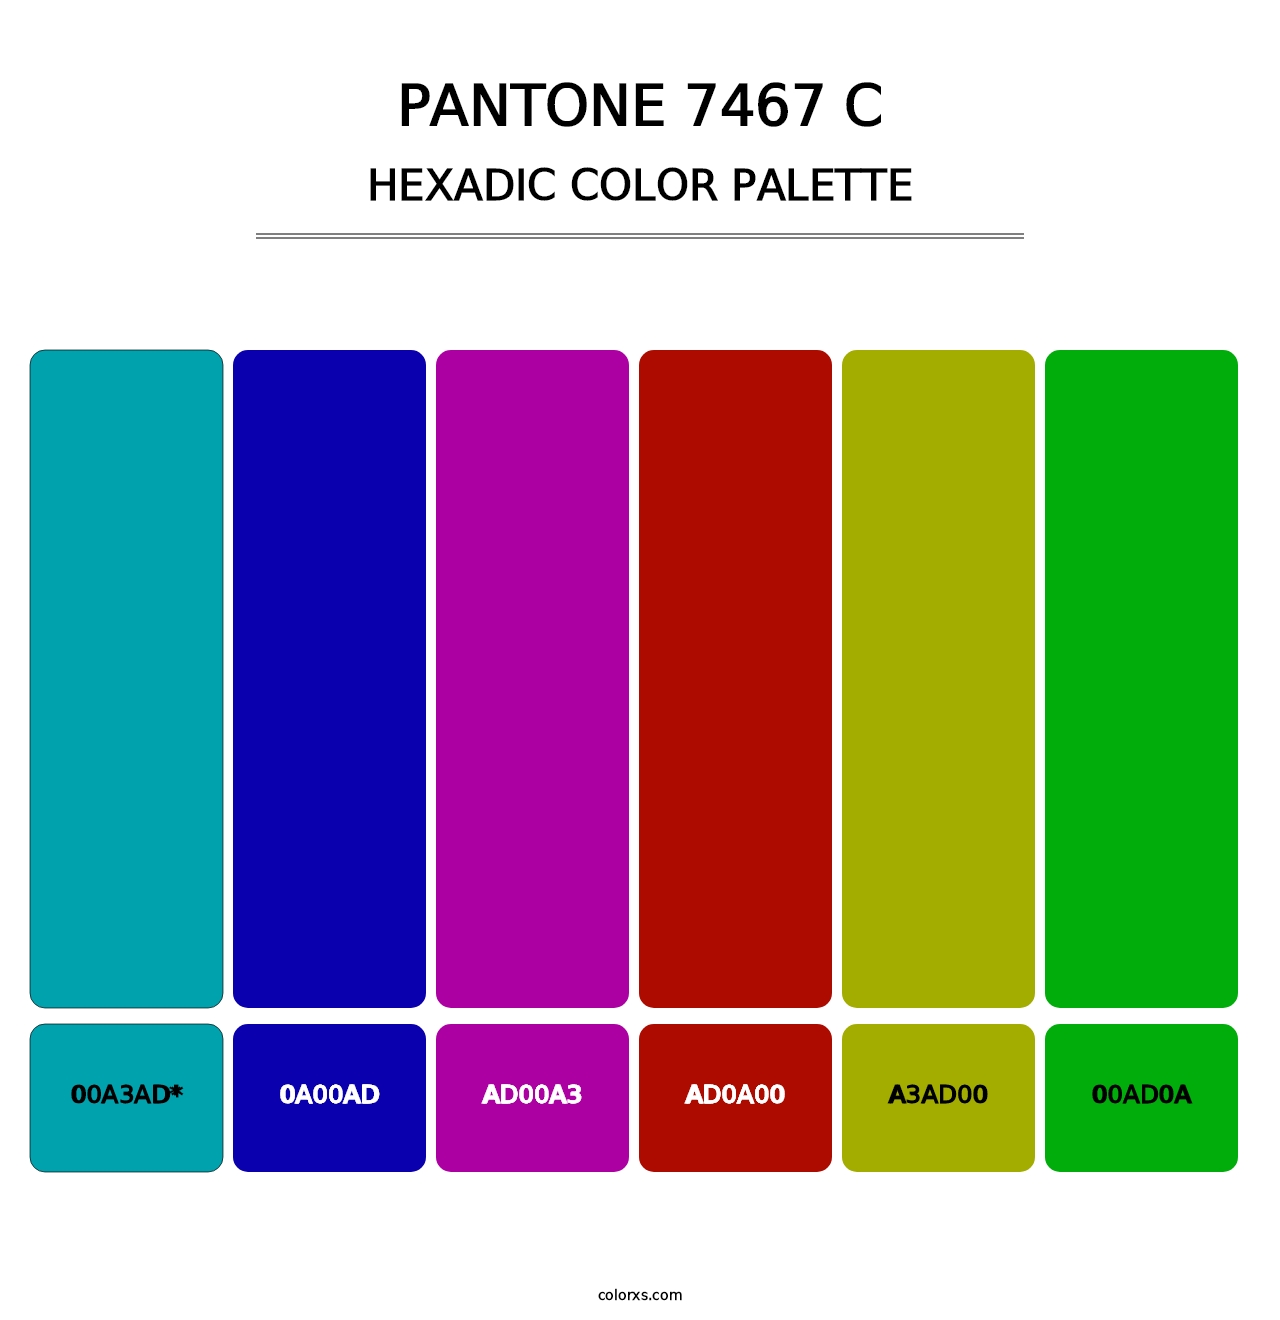 PANTONE 7467 C - Hexadic Color Palette